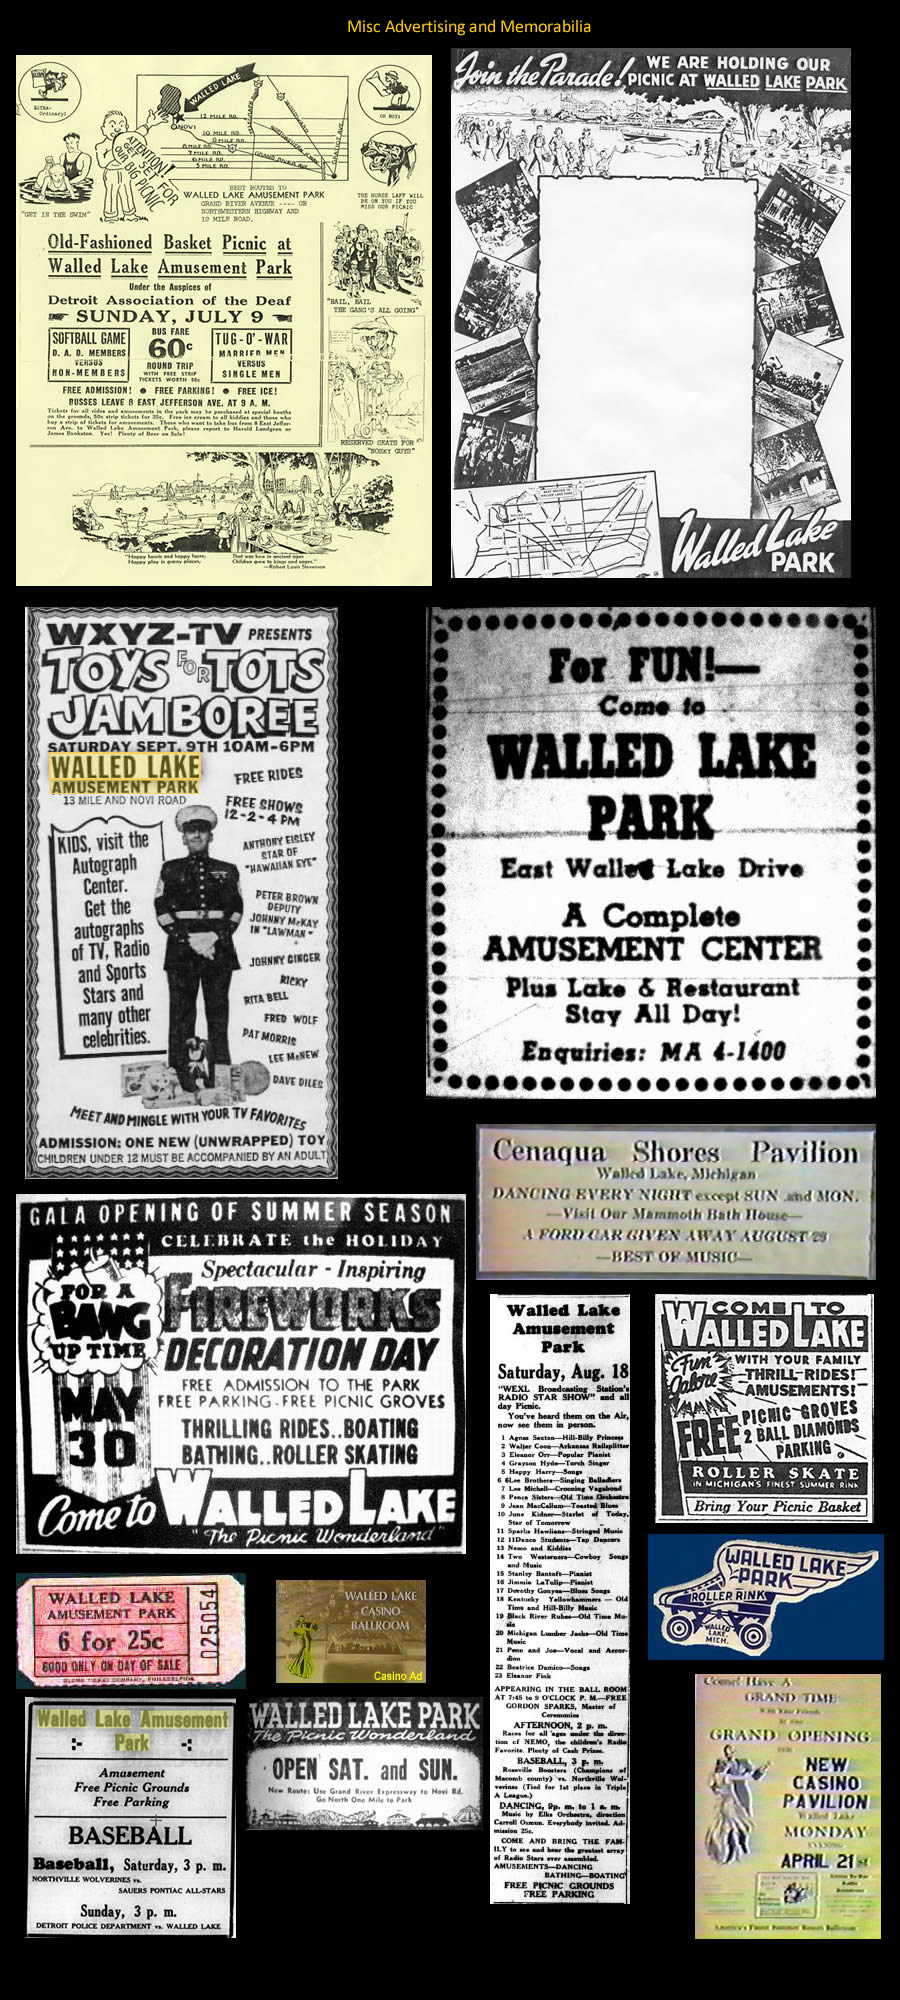 Walled Lake Amusement Park (Walled Lake Park) - Ads And Memorabilia